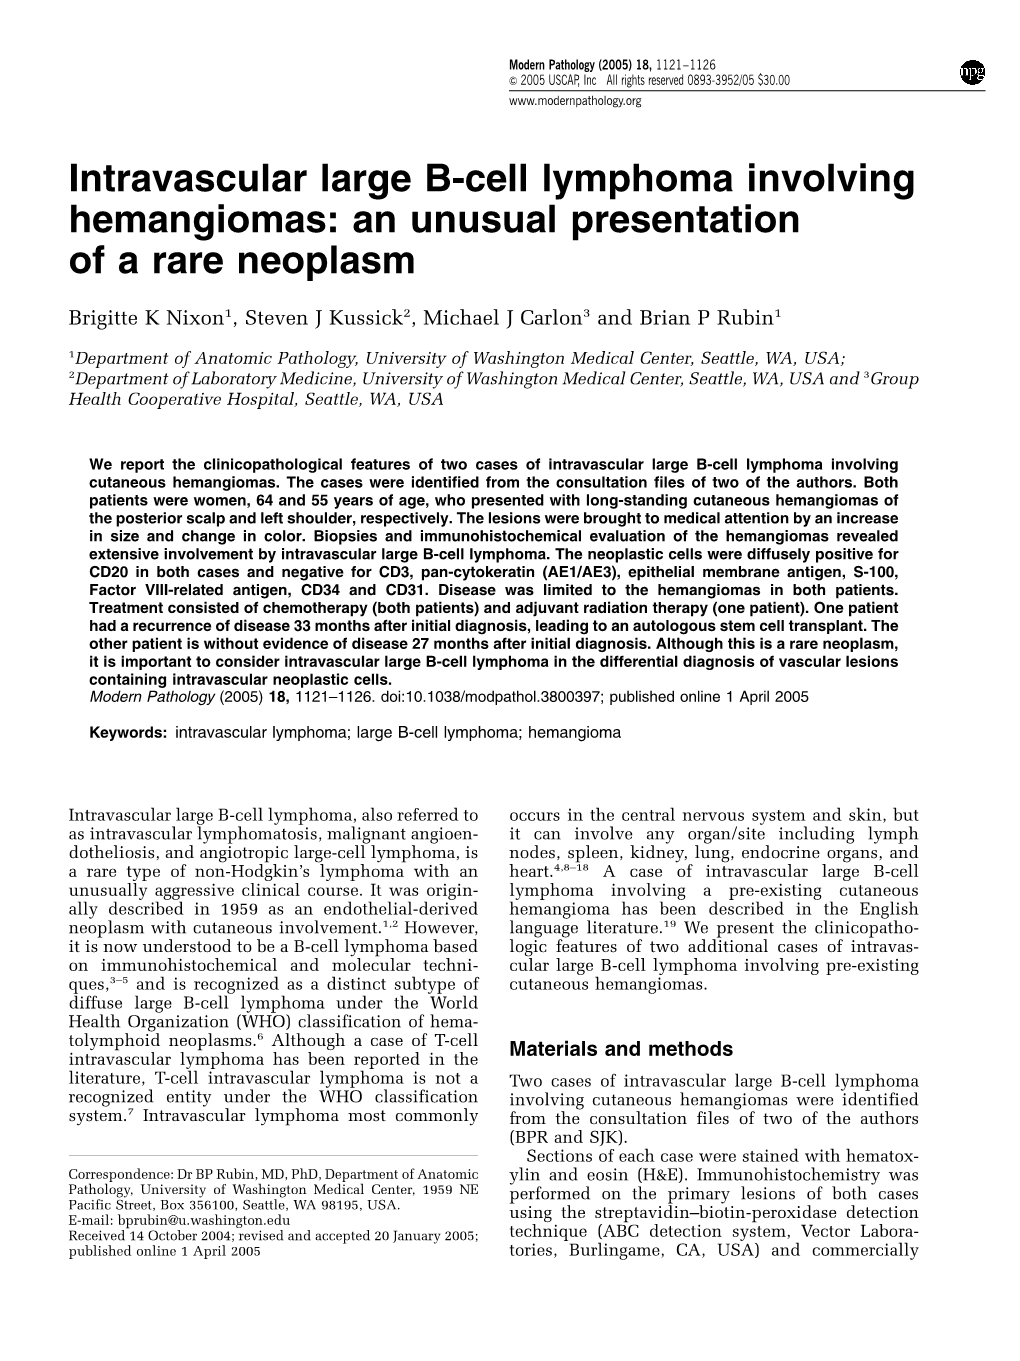 Intravascular Large B-Cell Lymphoma Involving Hemangiomas: an Unusual Presentation of a Rare Neoplasm